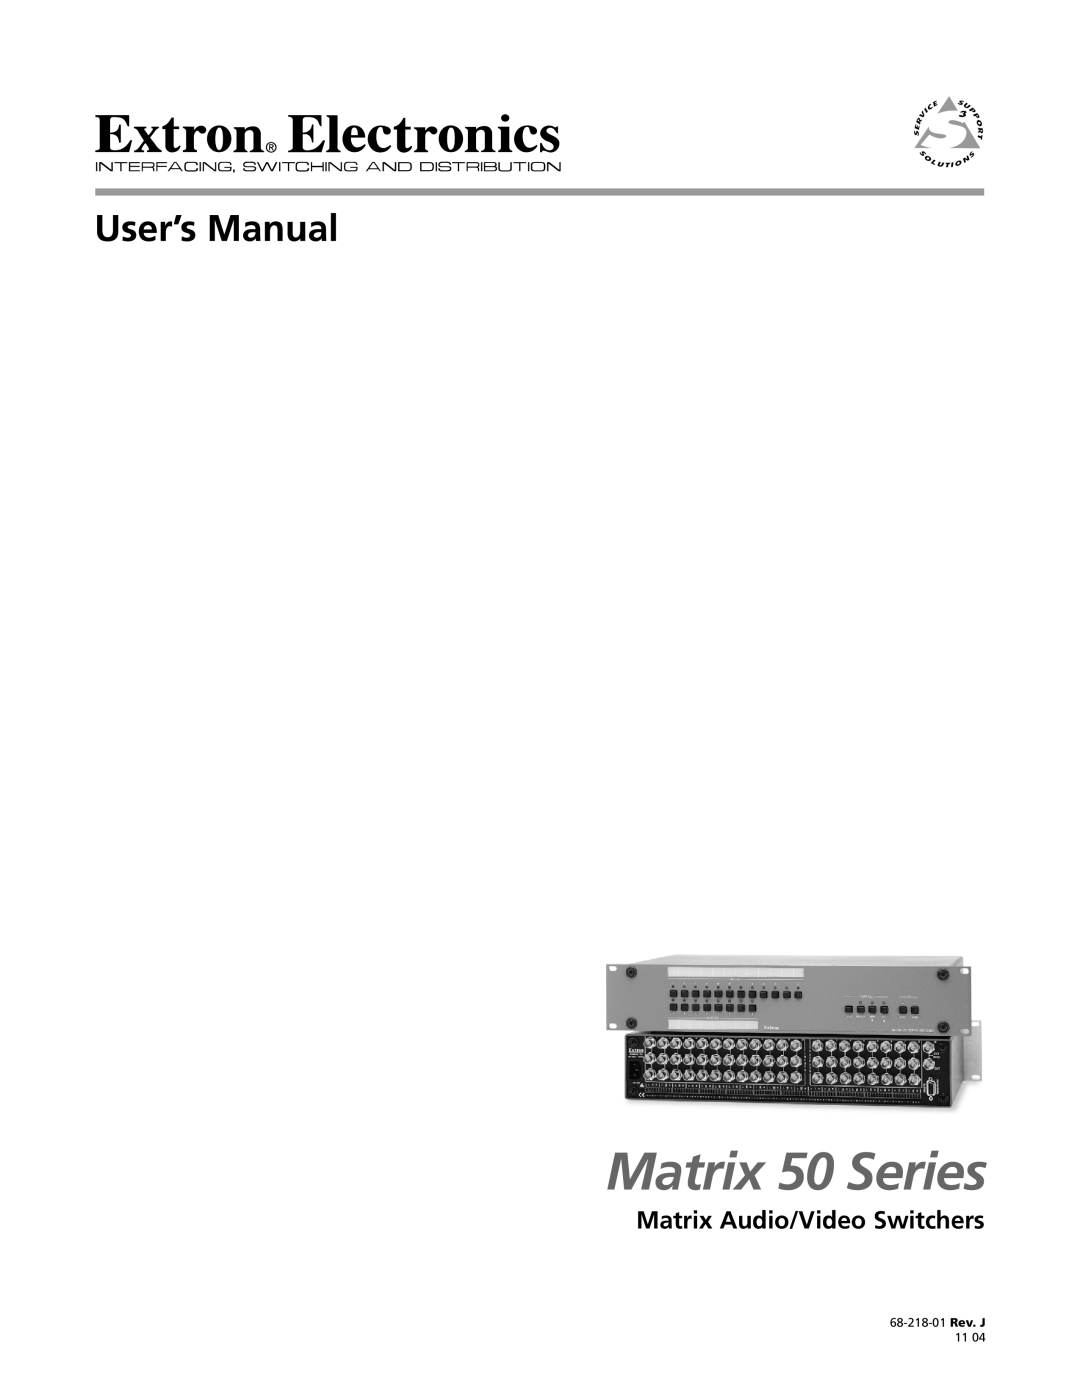 Extron electronic manual Matrix Audio/Video Switchers, Matrix 50 Series, 68-218-01 Rev. J 